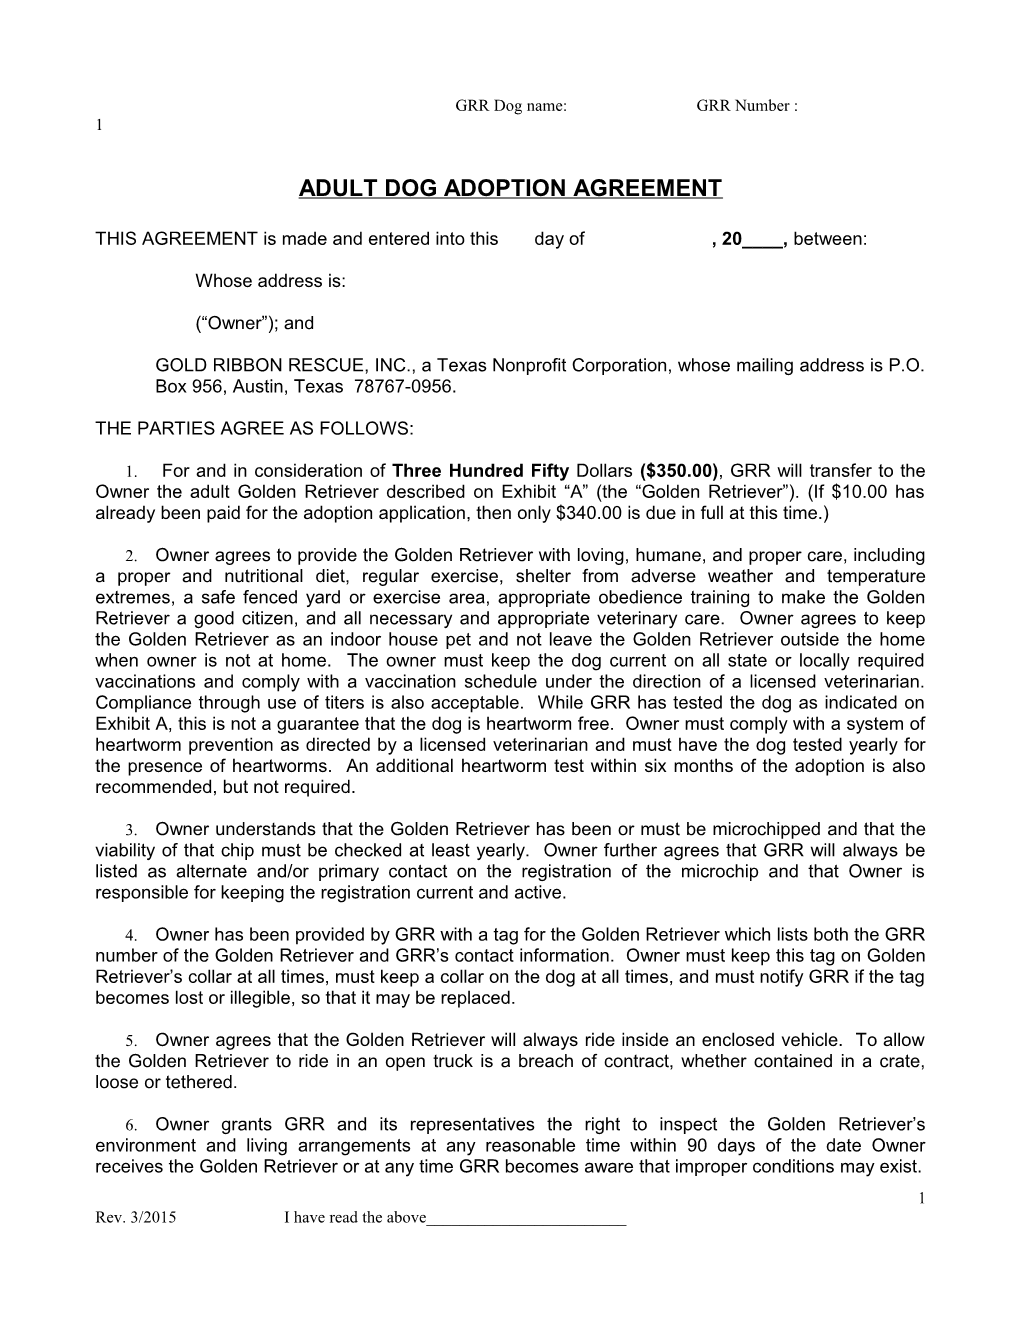 Adult Dog Adoption Agreement